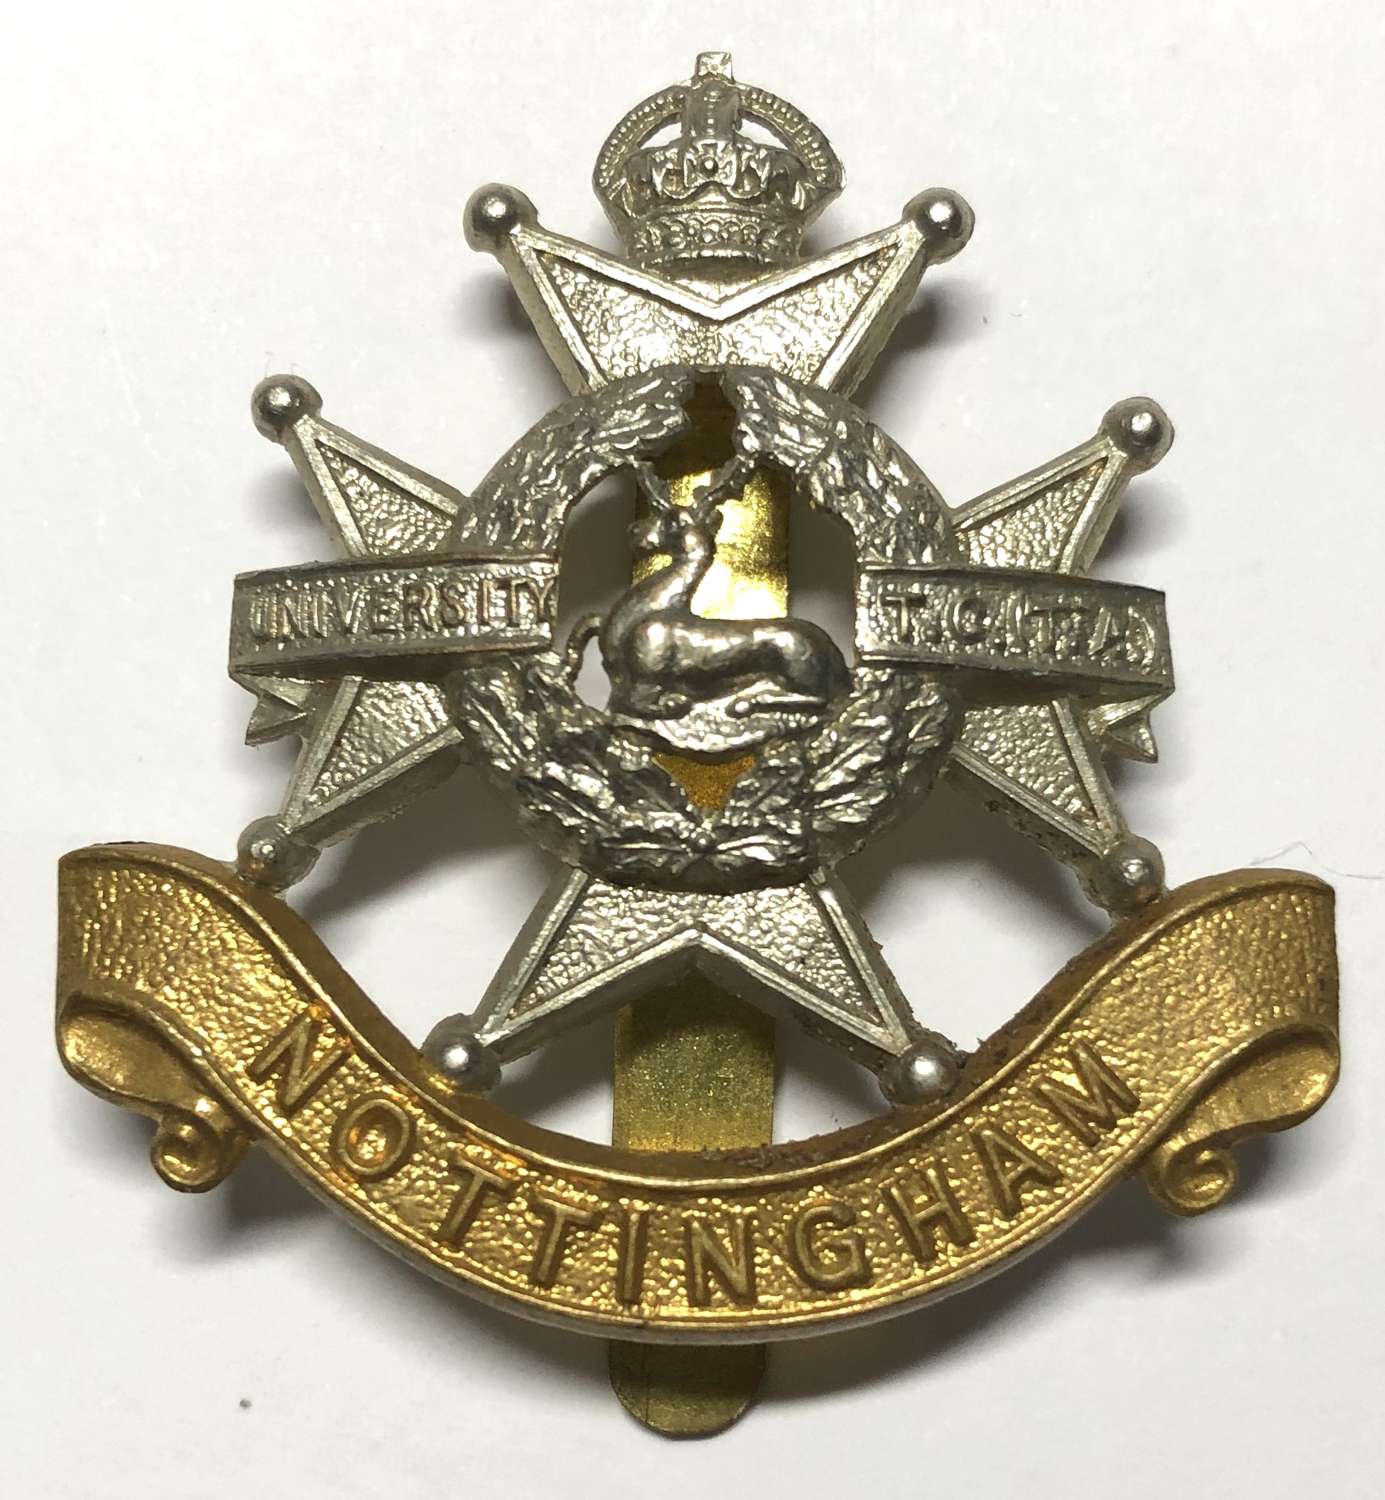 Nottingham University Training Corps (TA) cap badge by Gaunt c1948-52